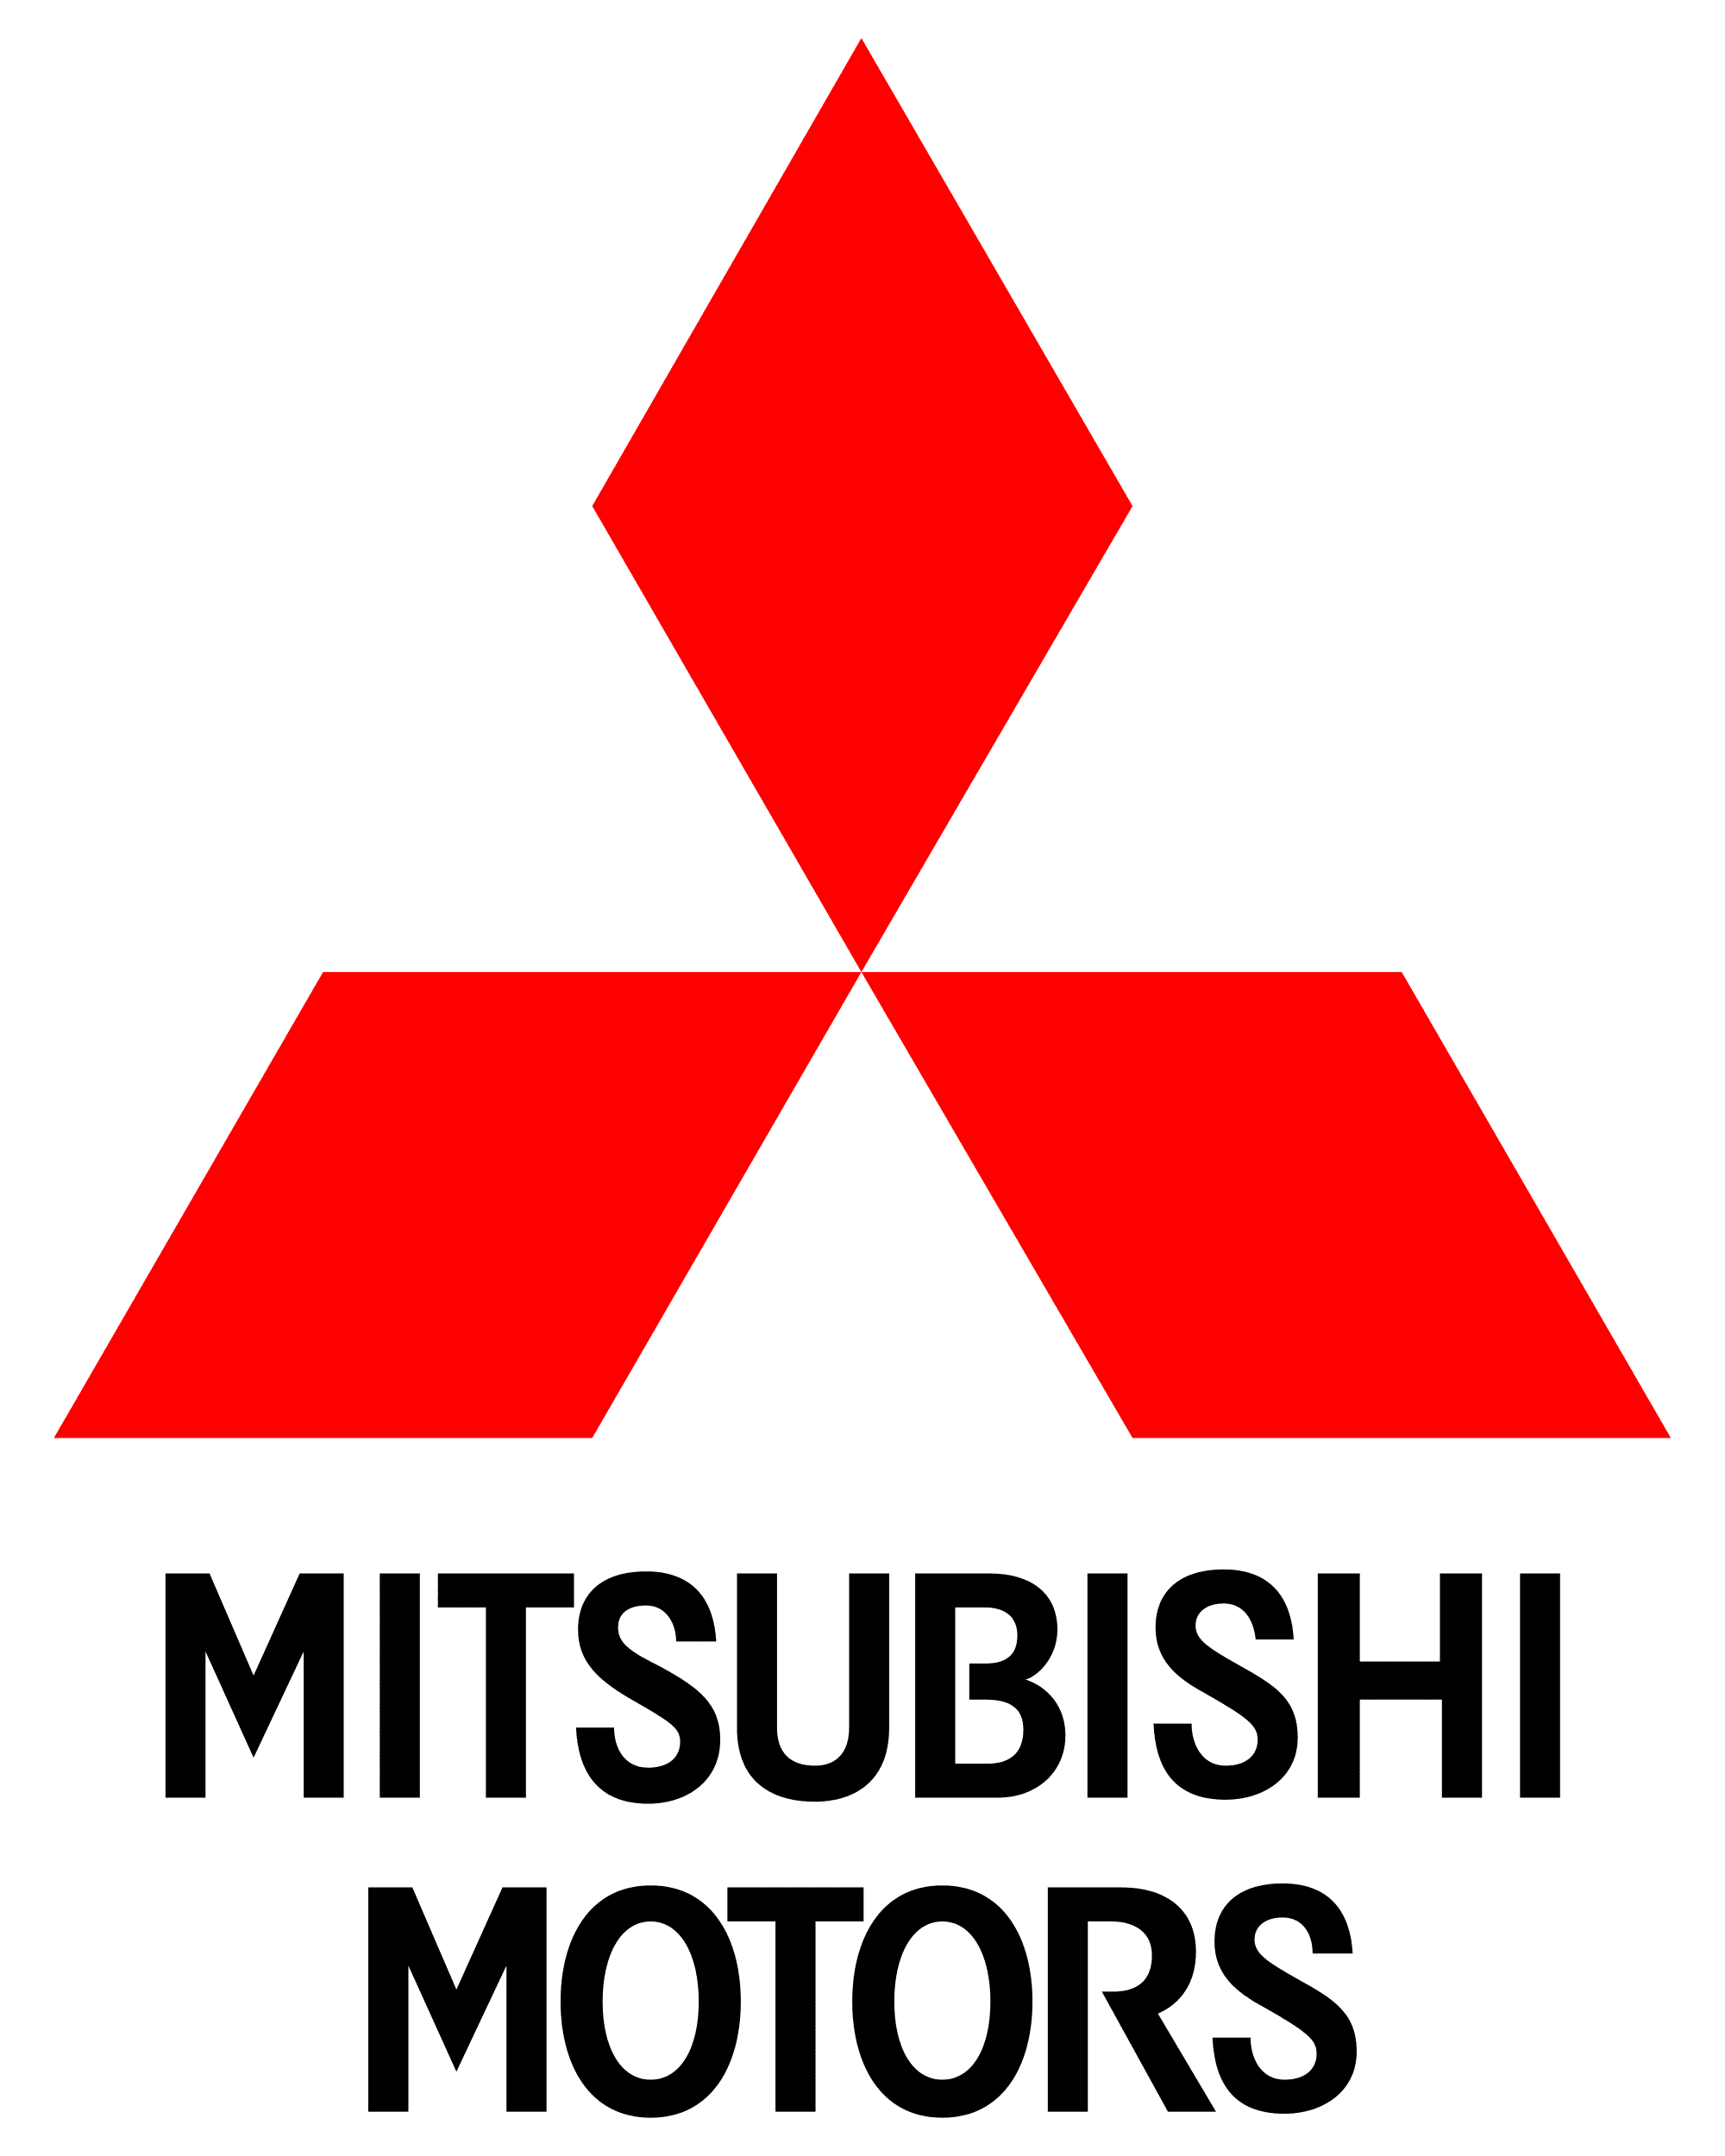 Mitsubishi window sticker